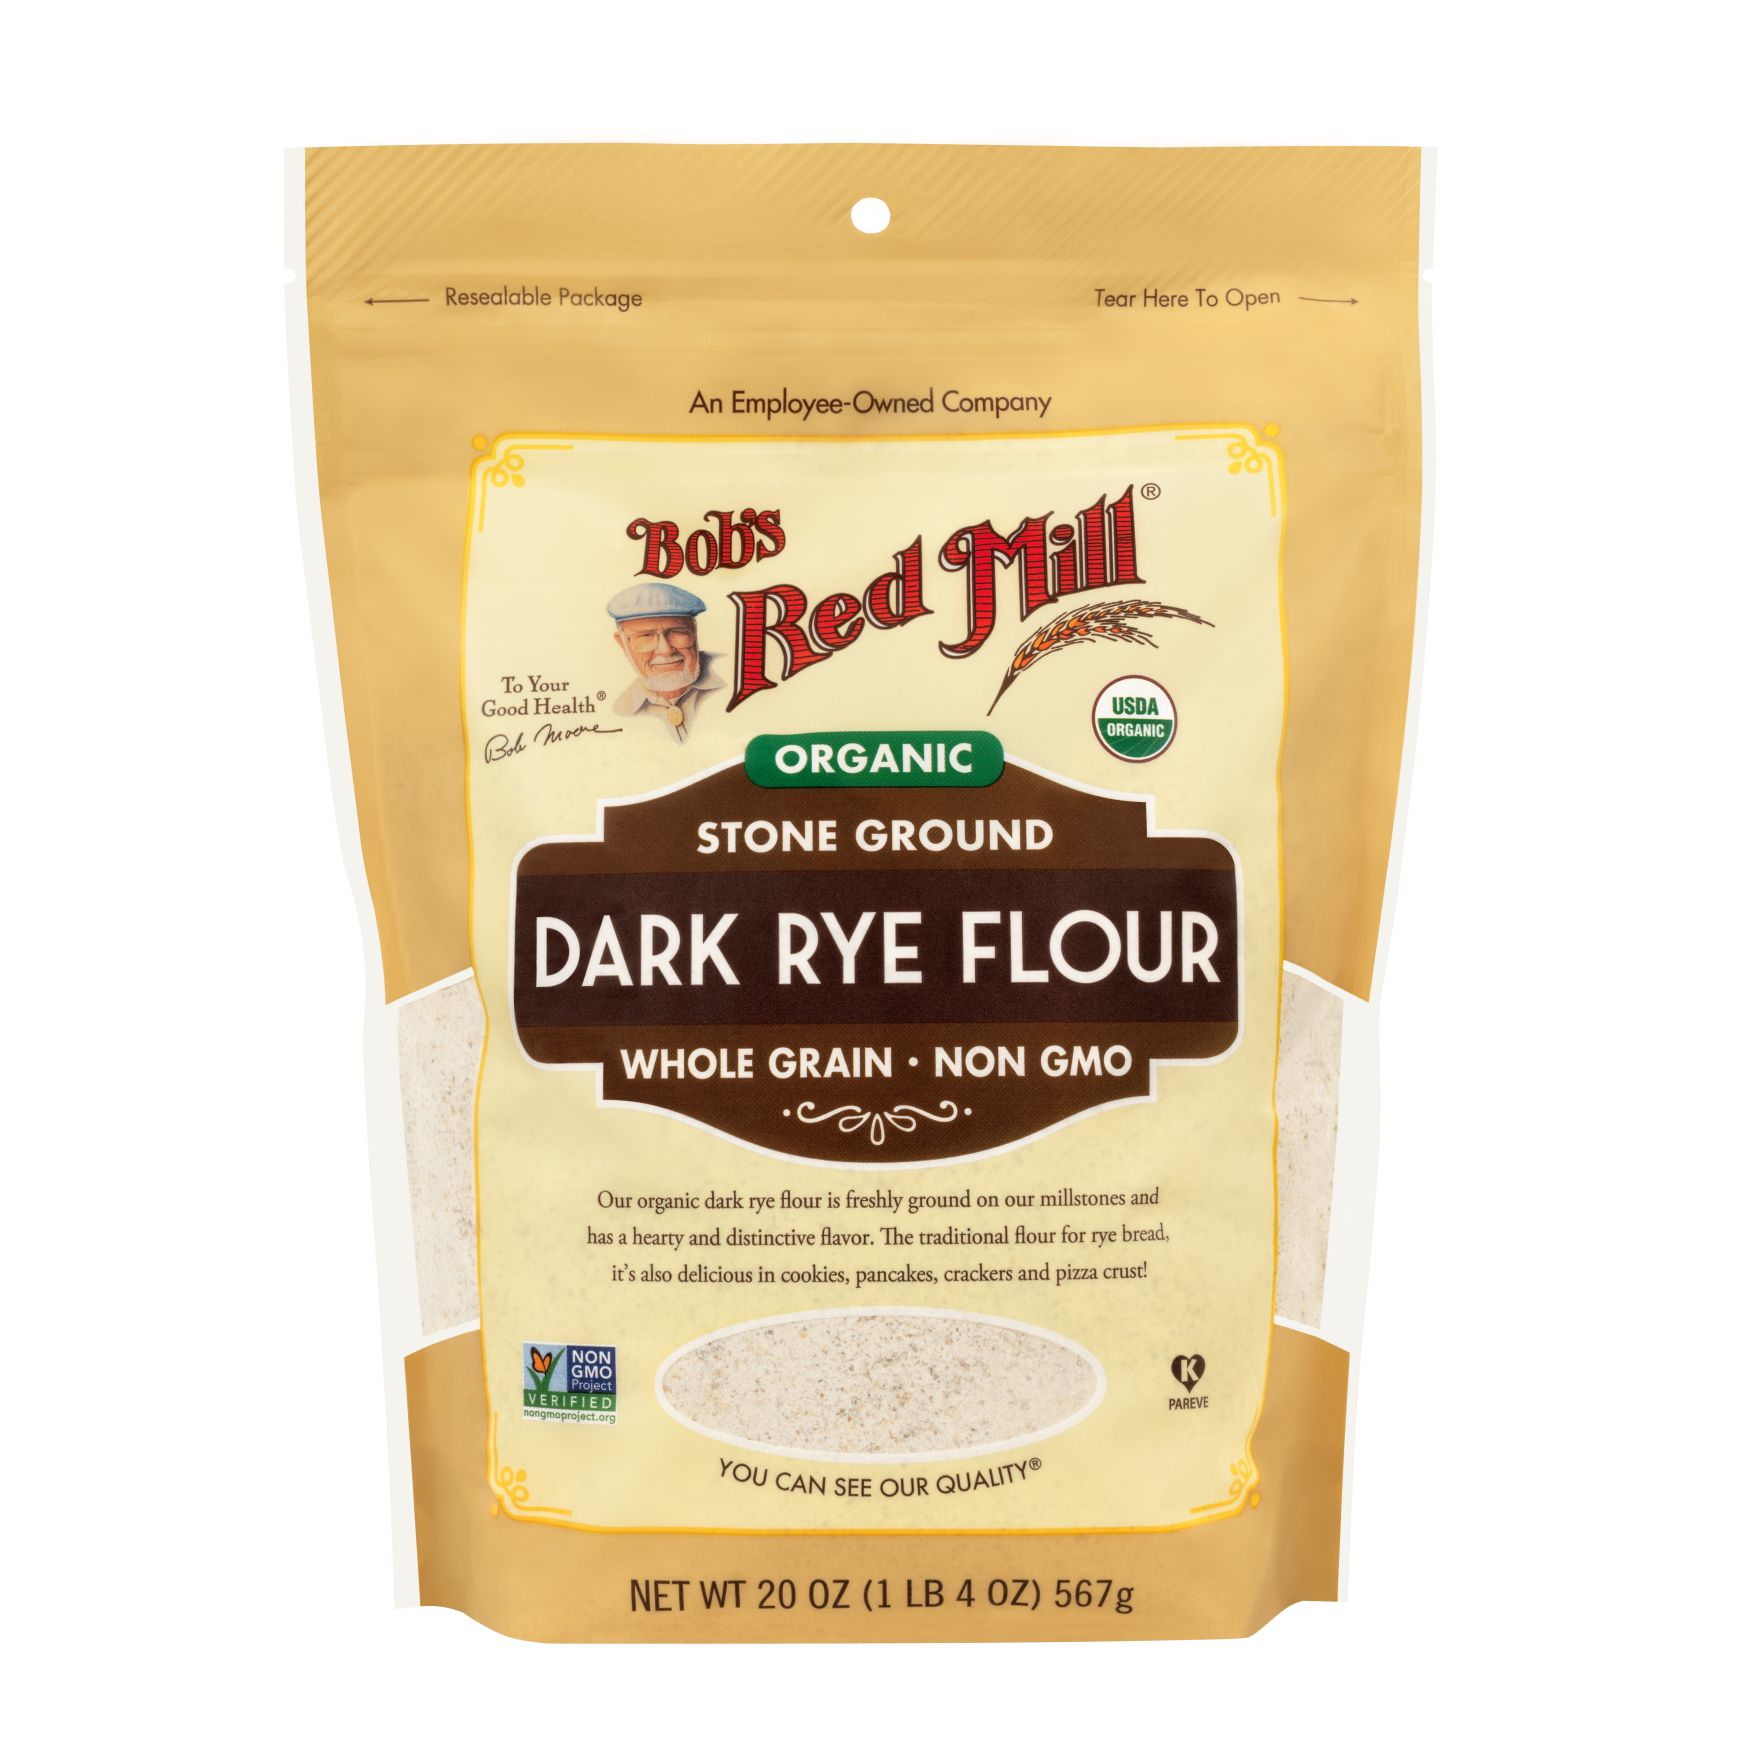 Organic Whole Grain Dark Rye Flour by Bob's Red Mill